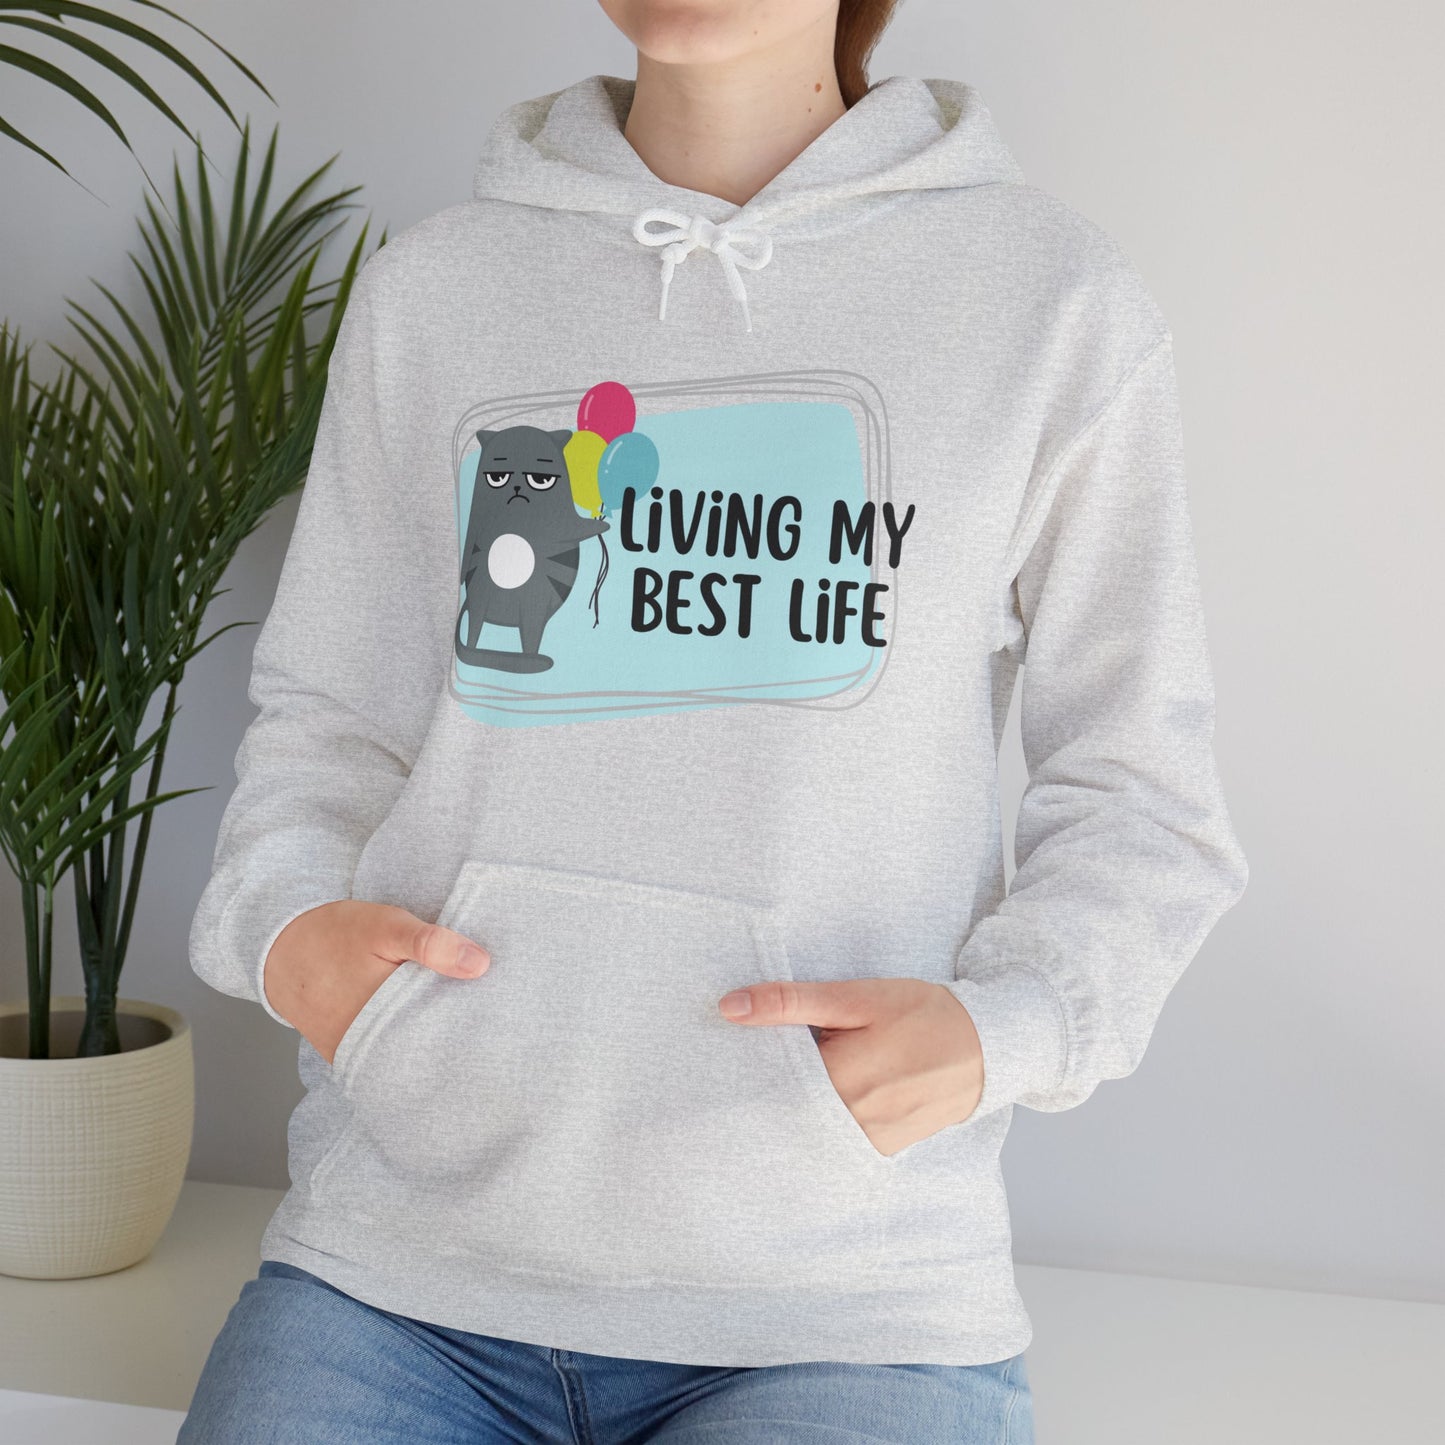 LIVING MY BEST LIFE - Unisex Hooded Sweatshirt